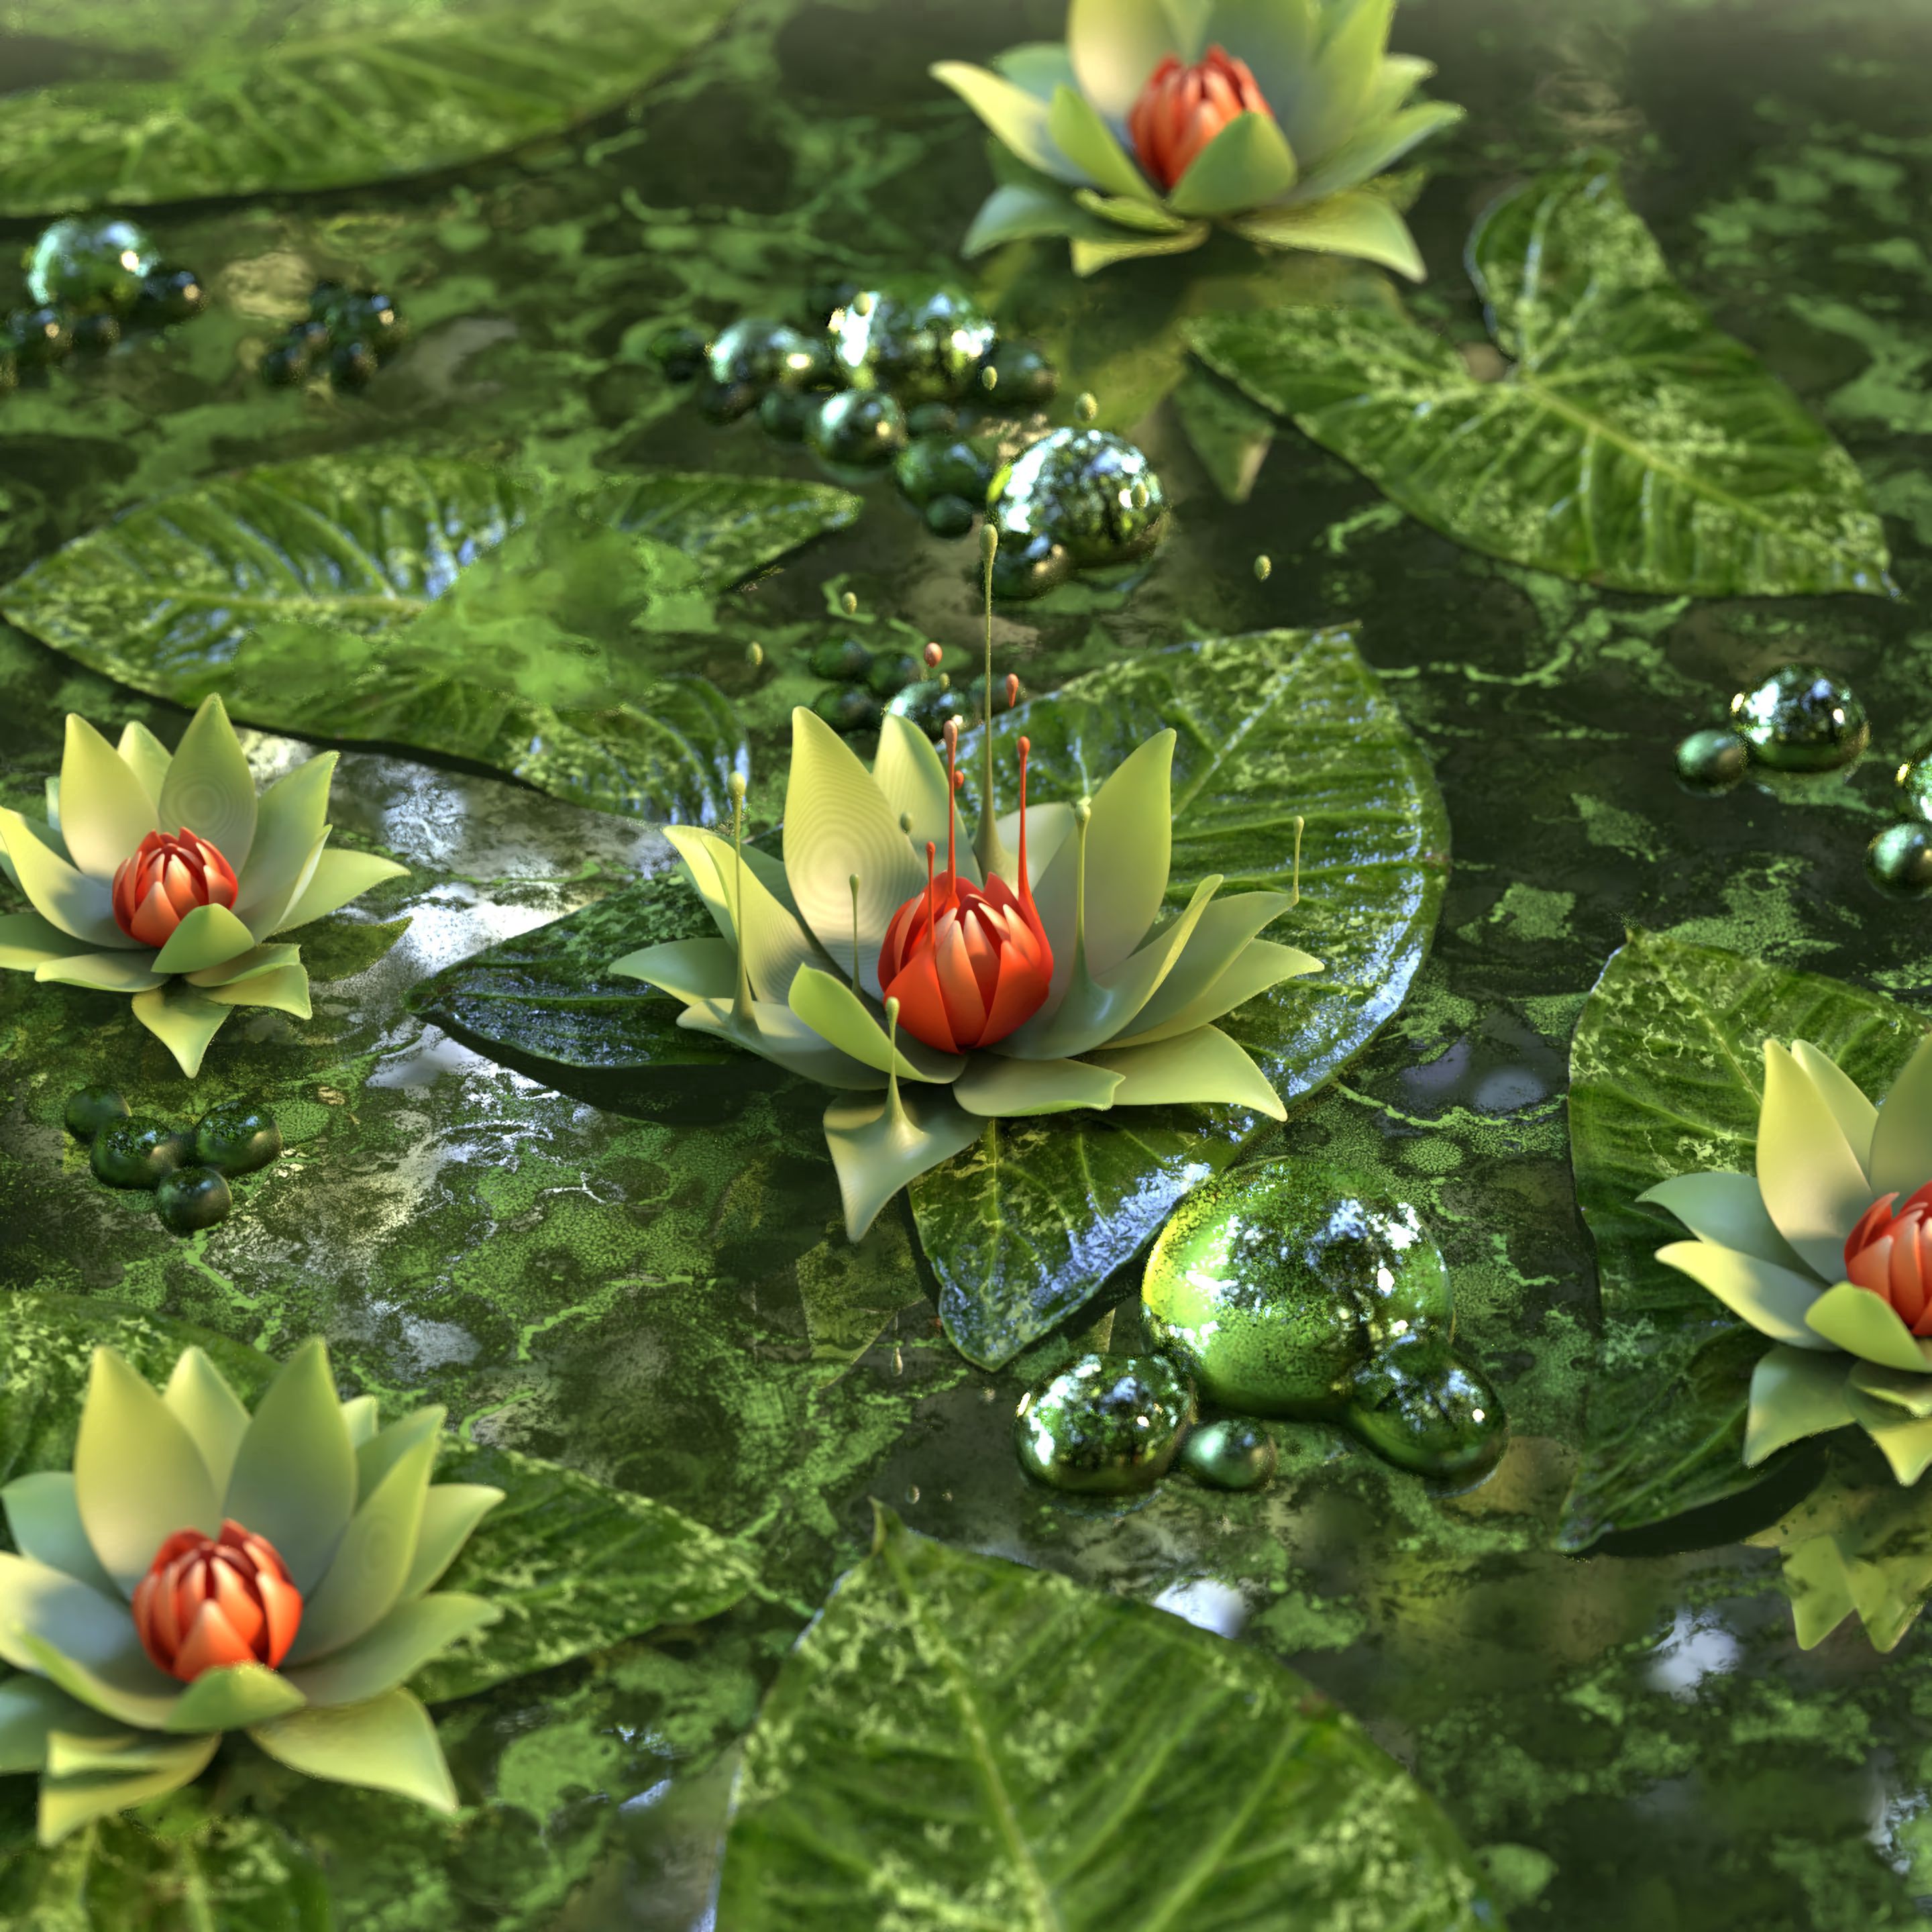 52898 descargar imagen flor, 3d, loto, verde, lirio de agua, nenúfar: fondos de pantalla y protectores de pantalla gratis